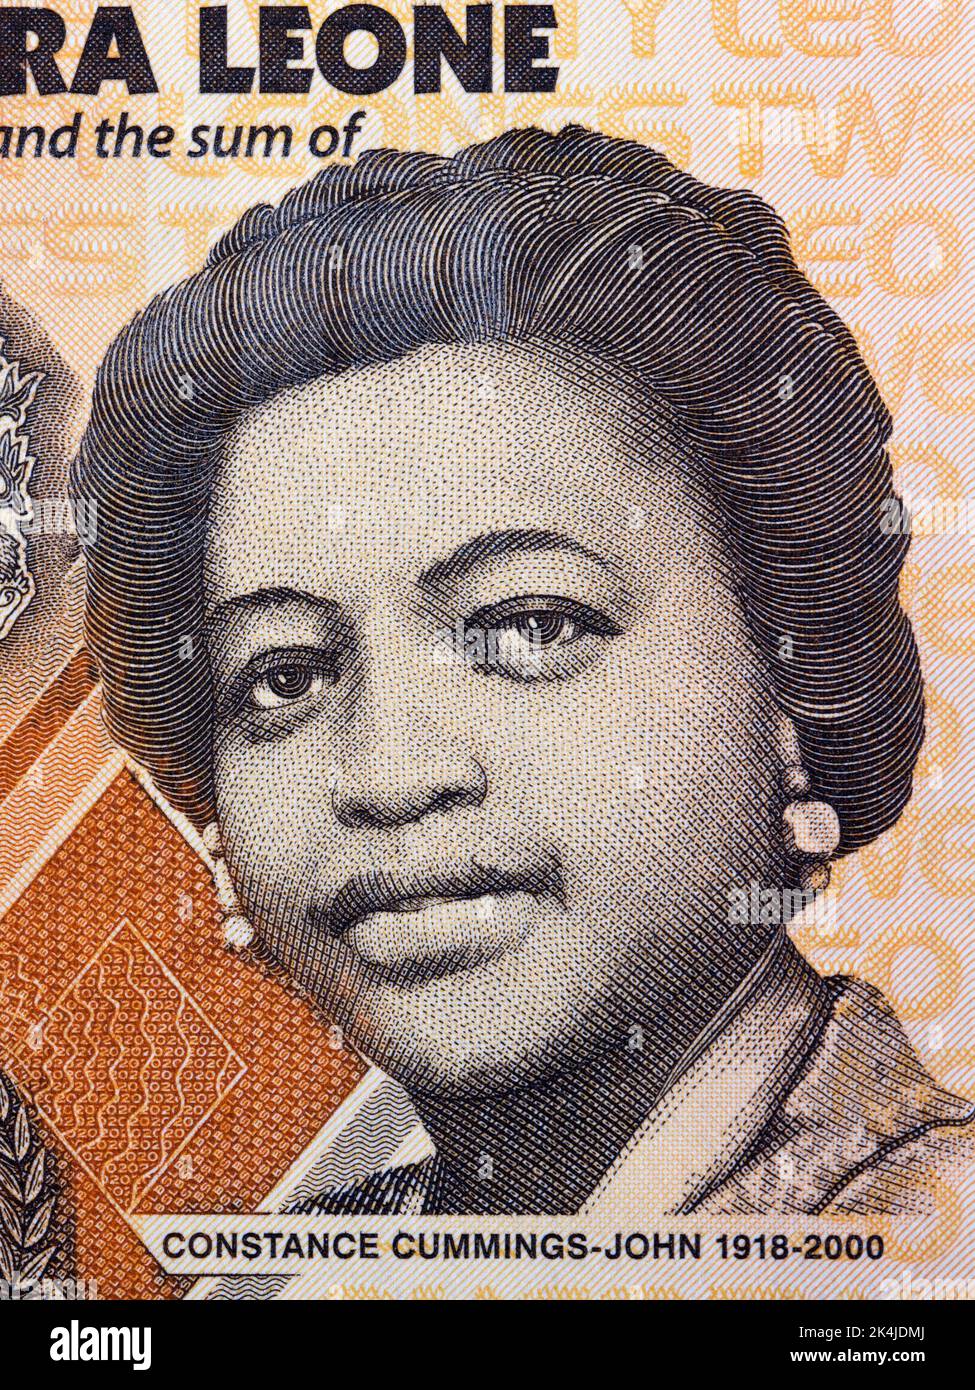 Constance Cummings-John a portrait from Sierra Leonean money - Leones Stock Photo